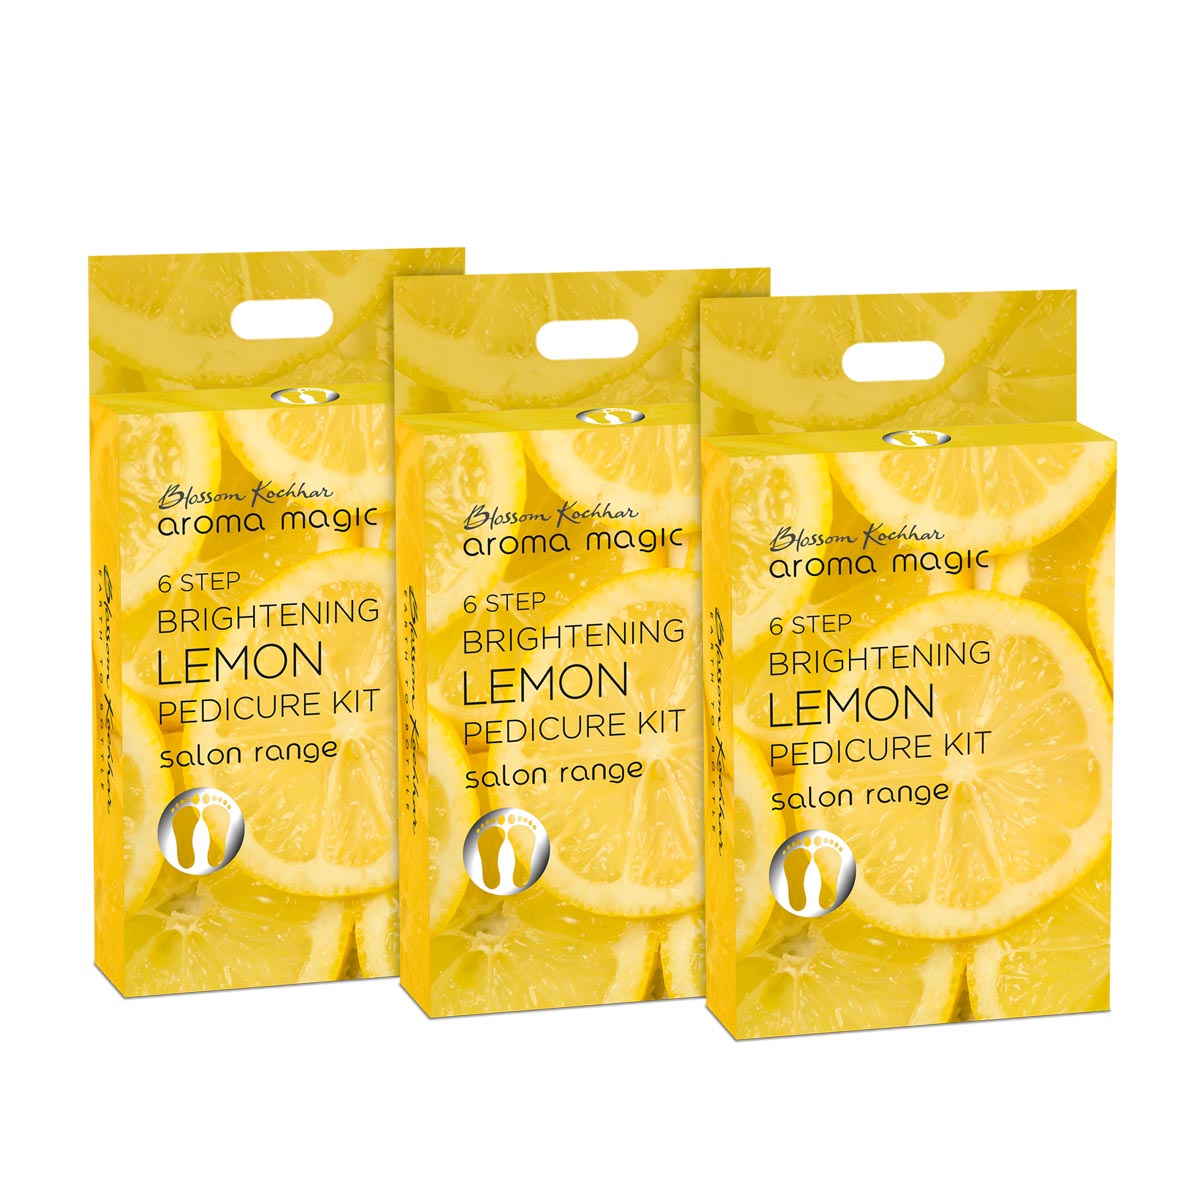 Brightening Lemon Pedicure Kit for 3 Use